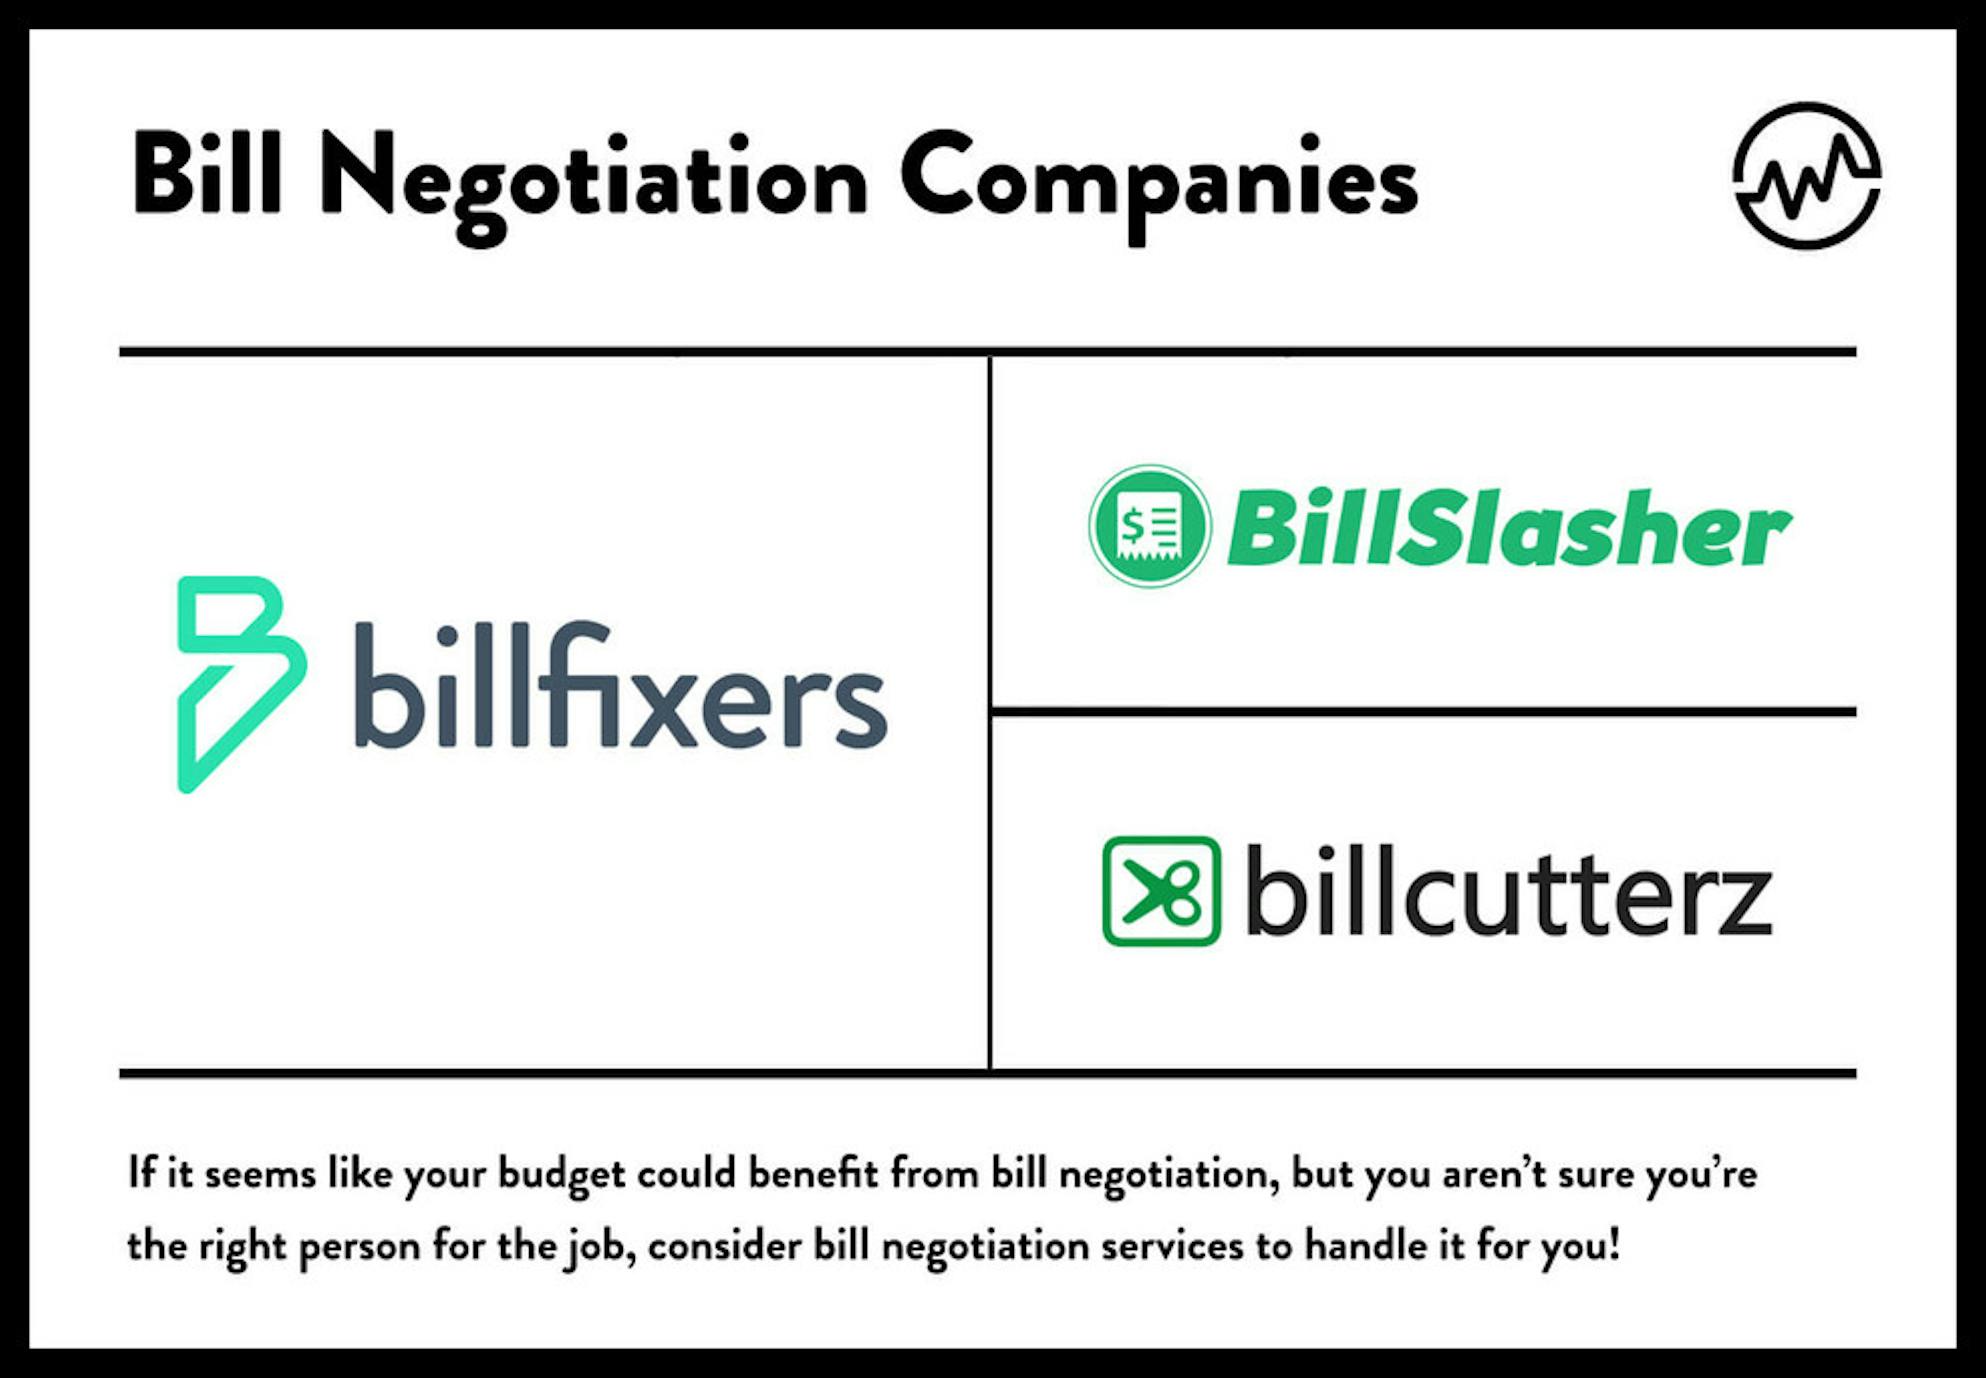 Bill Negotiation Companies